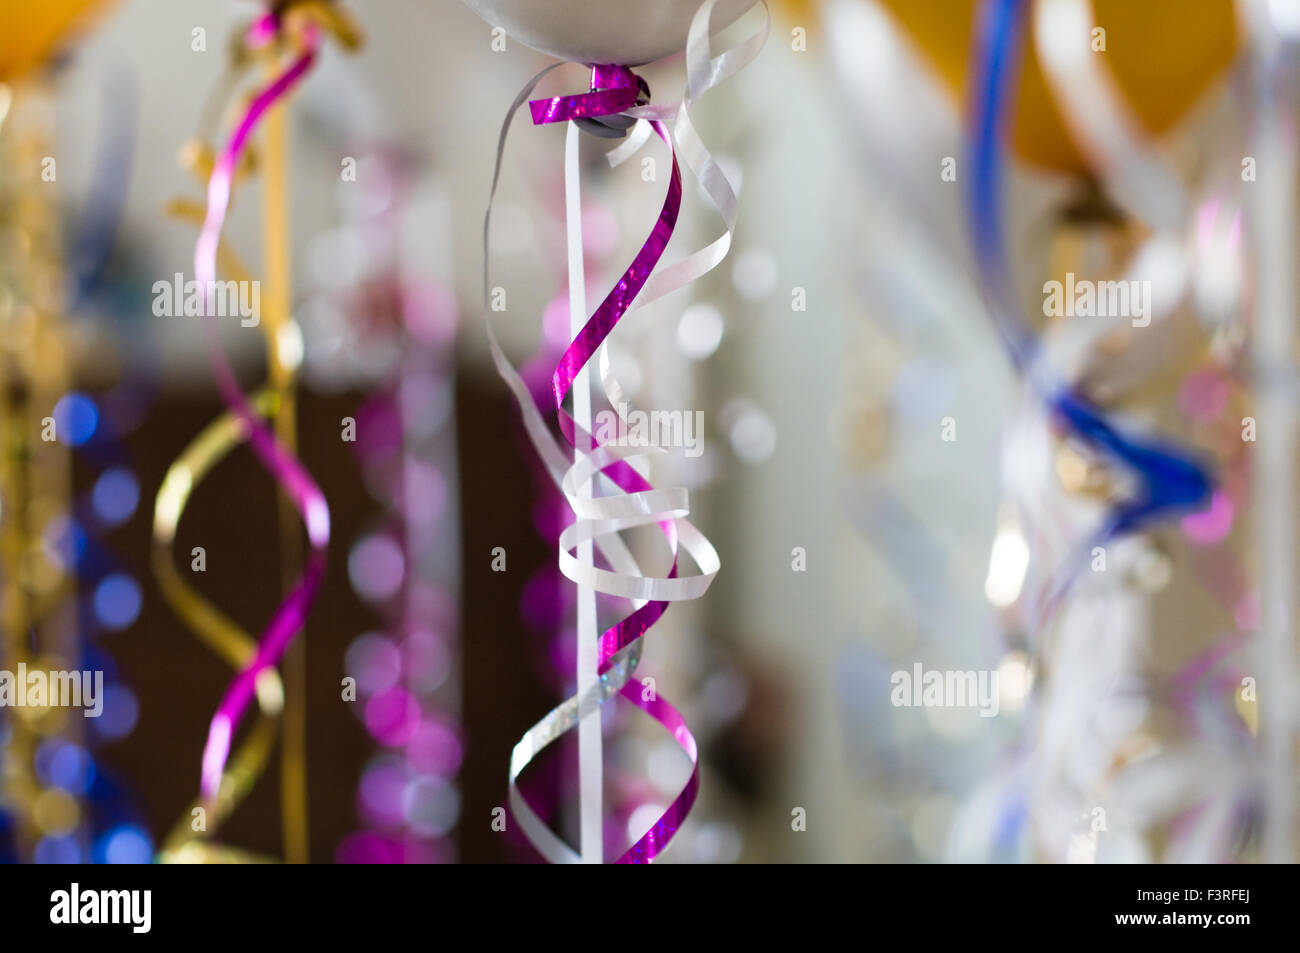 Shiny decorative ribbons hanging from helium balloons Stock Photo - Alamy